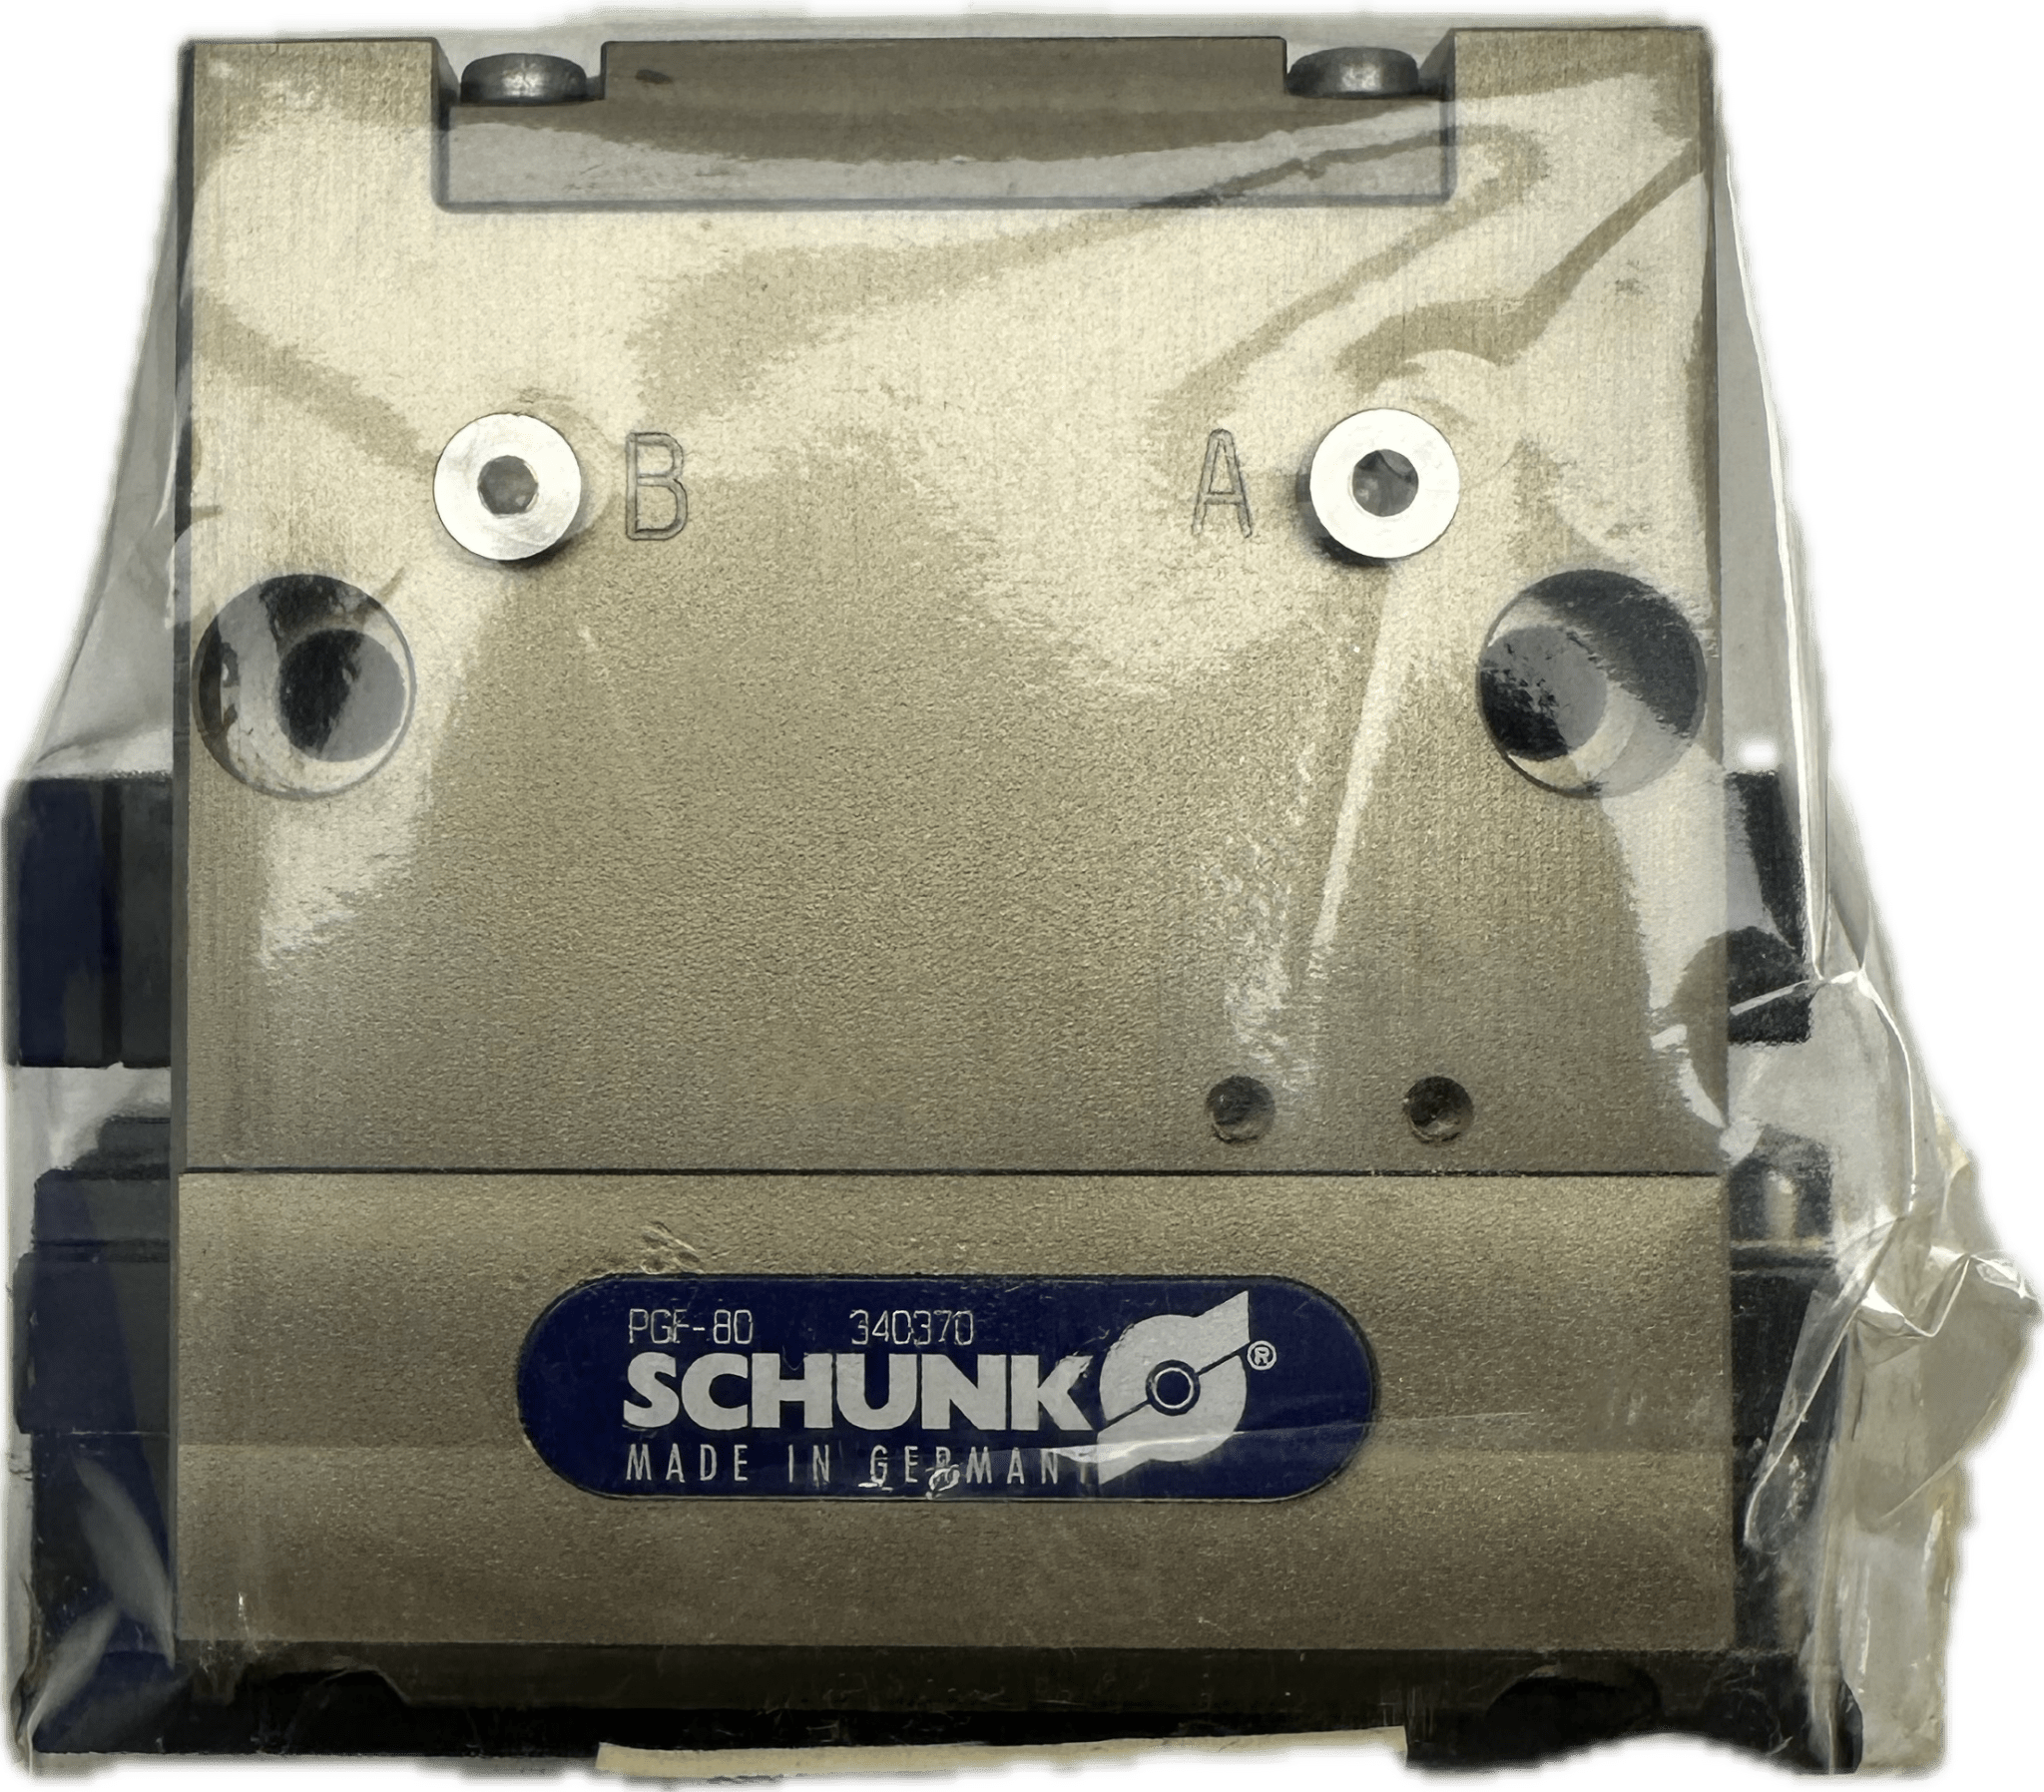 Schunk 340370 Universalgreifer PGF80 - #product_category# | Klenk Maschinenhandel